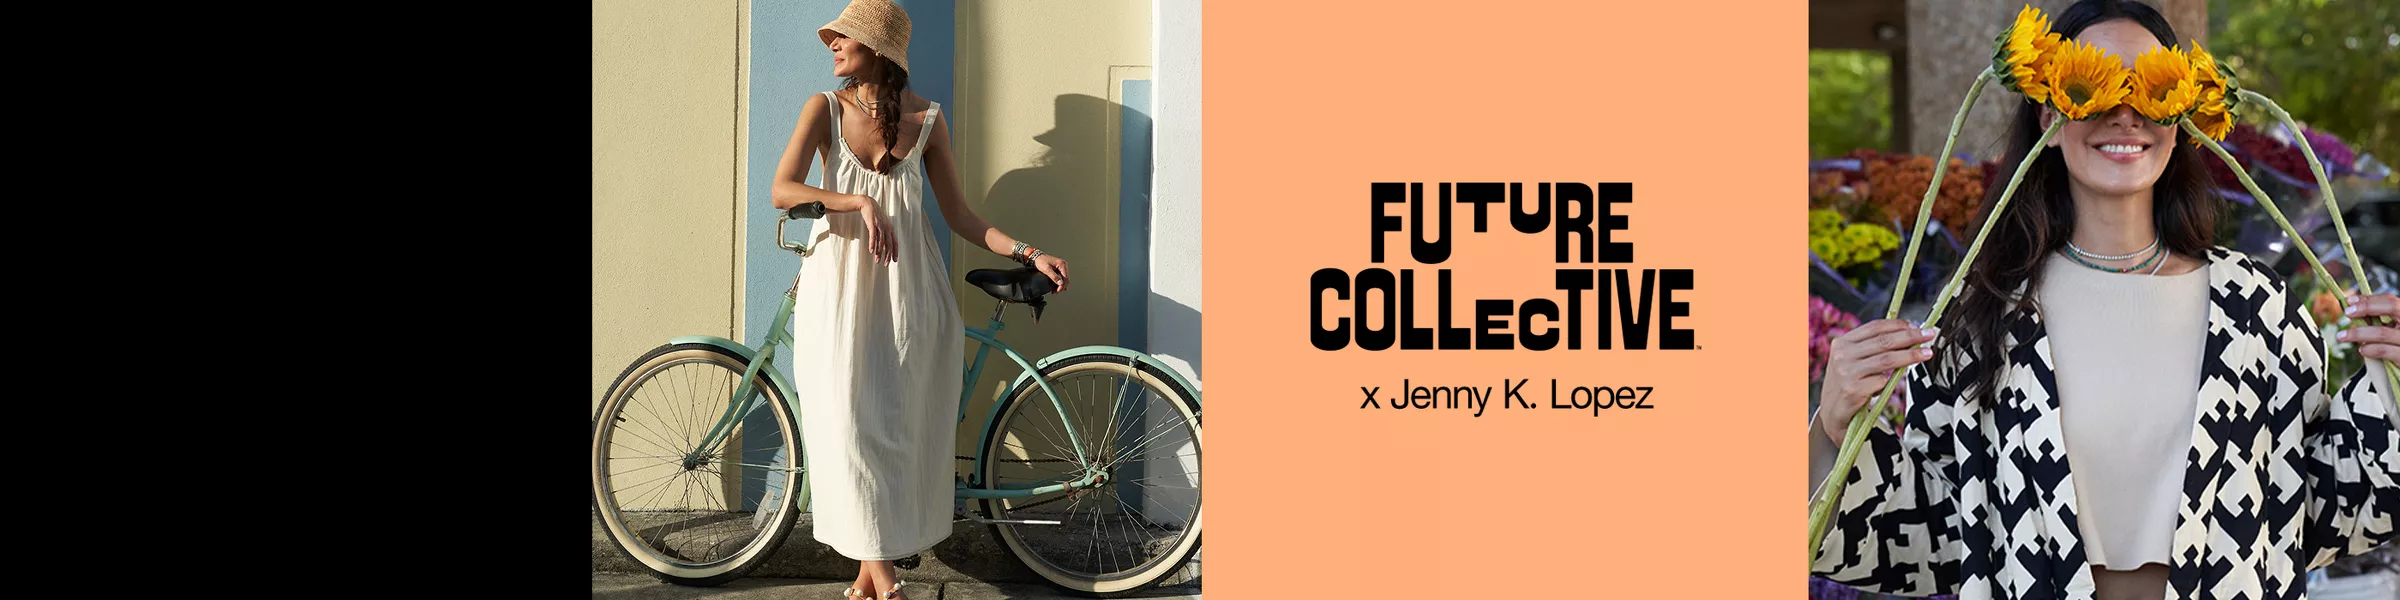 Future Collective x Jenny K. Lopez